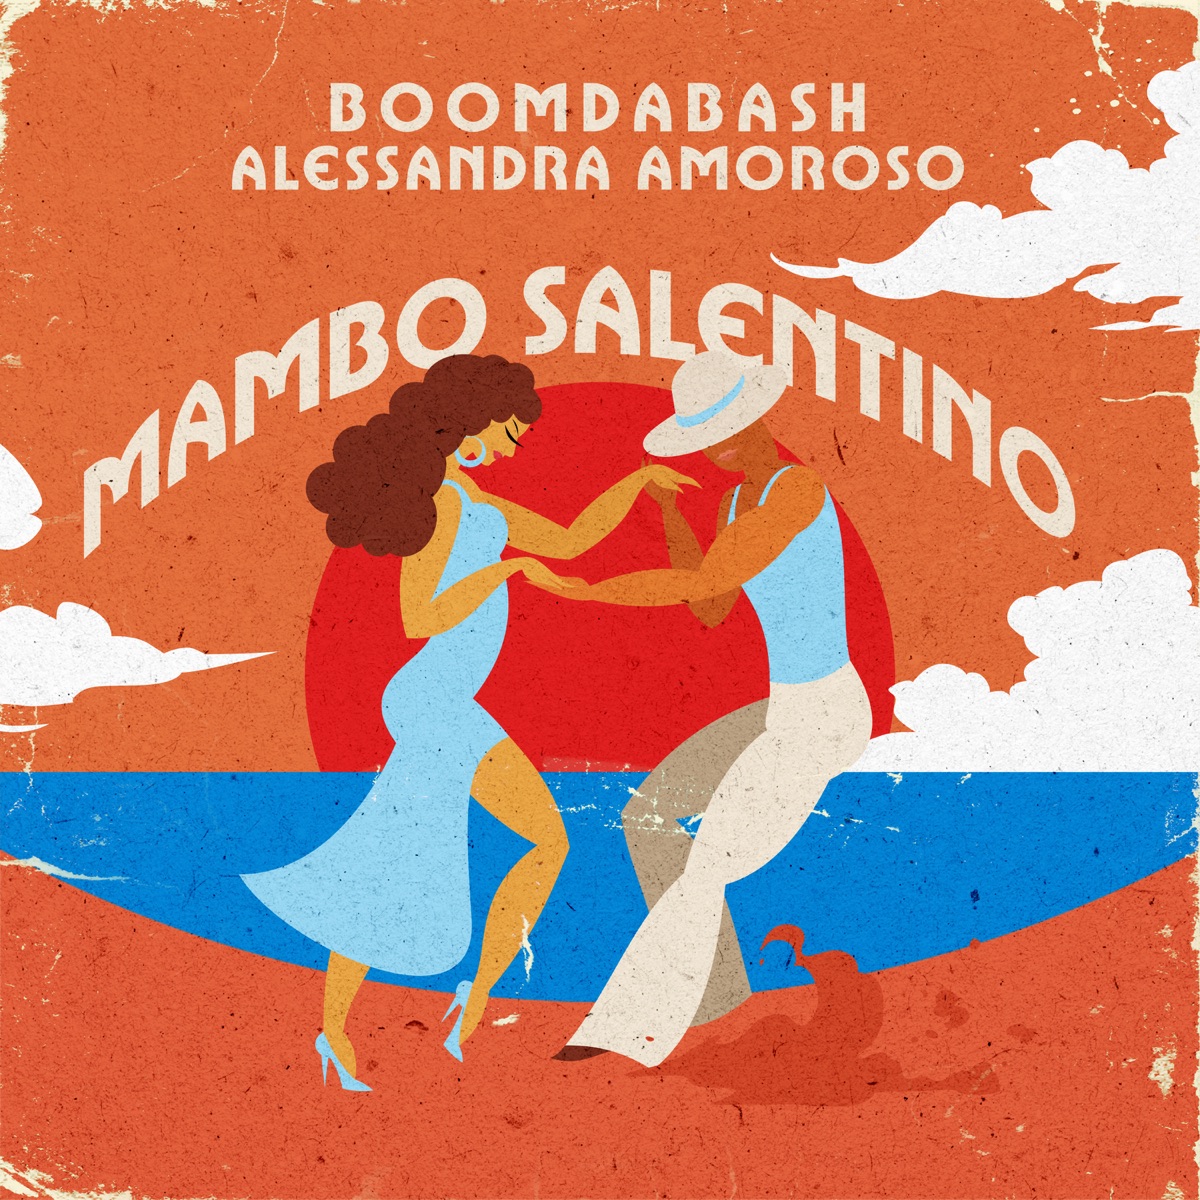 ‎Mambo Salentino - Single - Album by Boomdabash & Alessandra Amoroso -  Apple Music